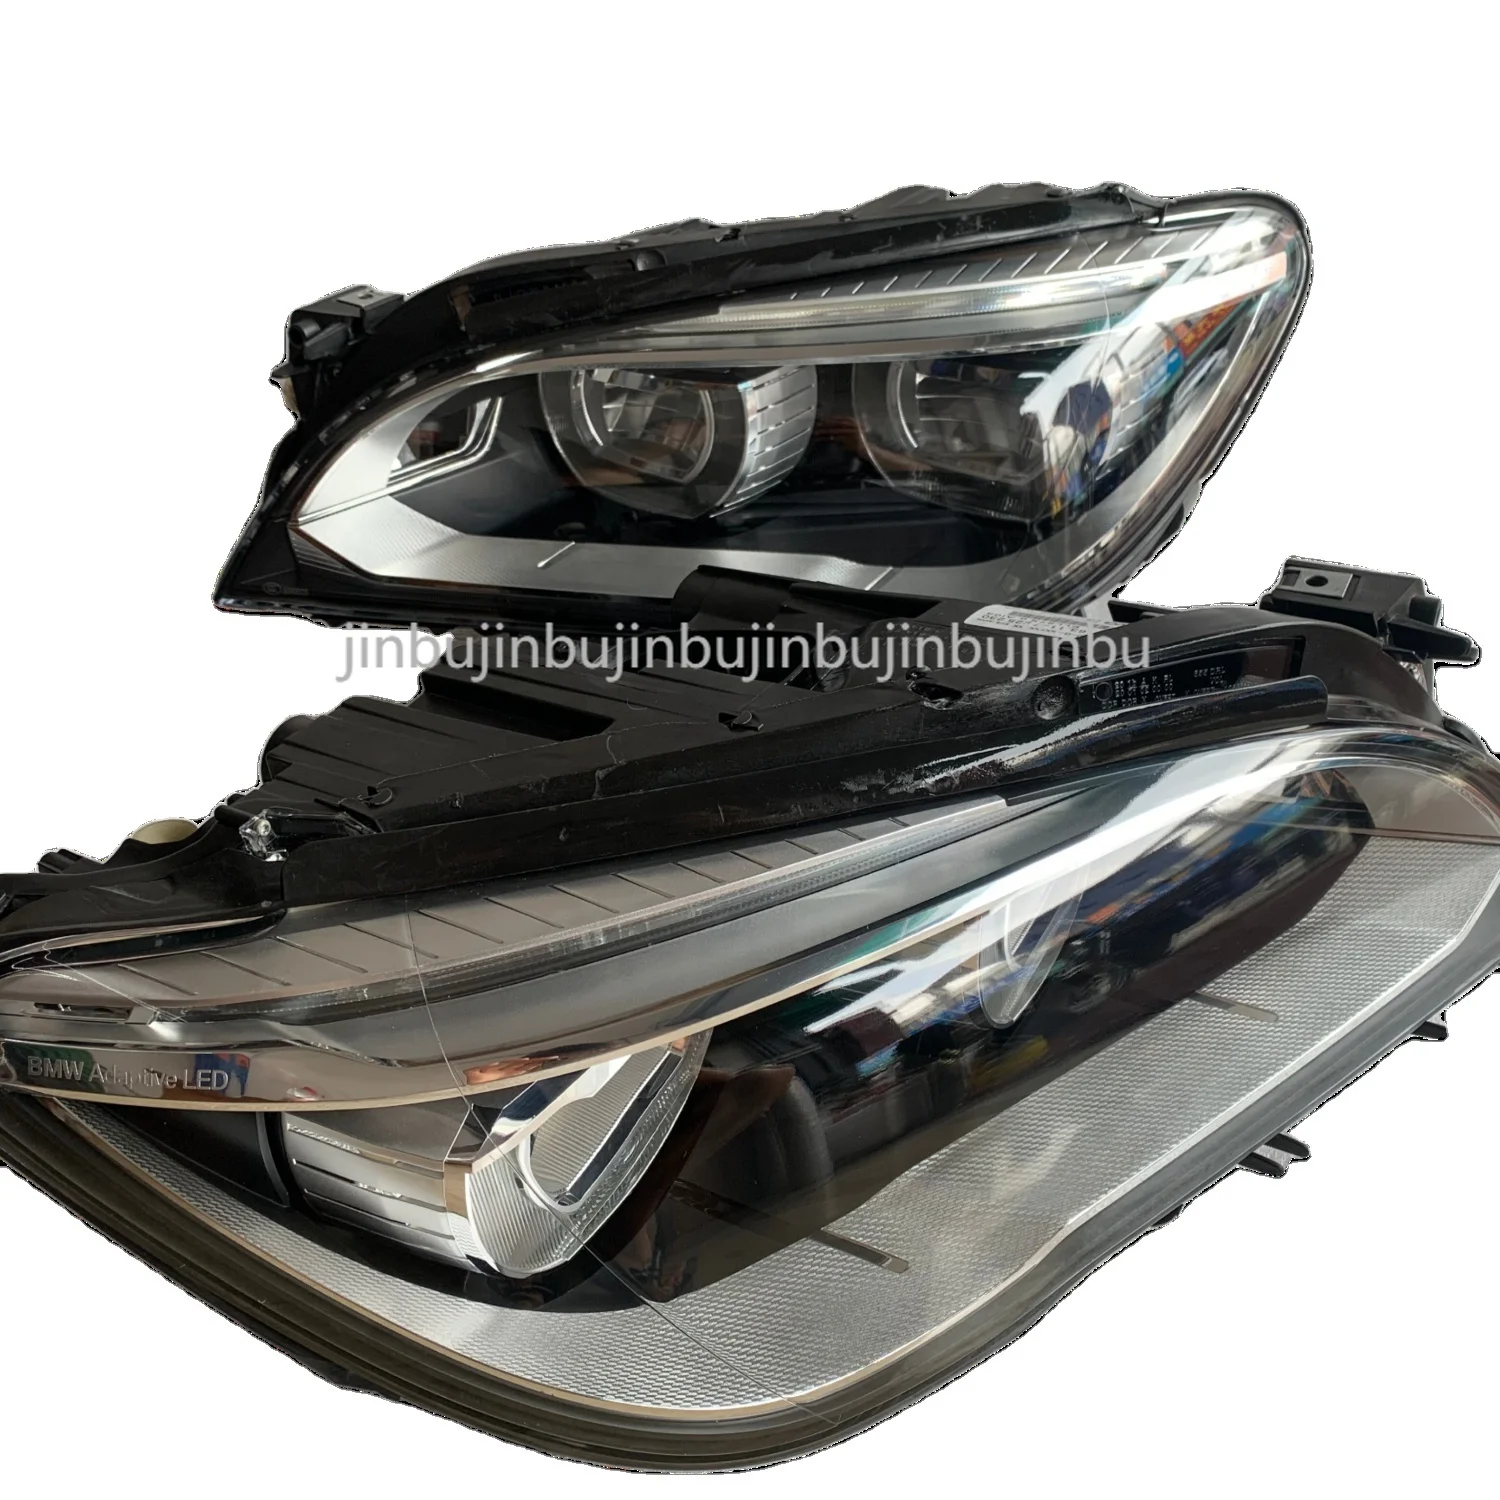 

Auto full led modified car front headlamp headlight for BMW 7 Series F02 F01 730 740 750 760 2009-2015 head light head lamp